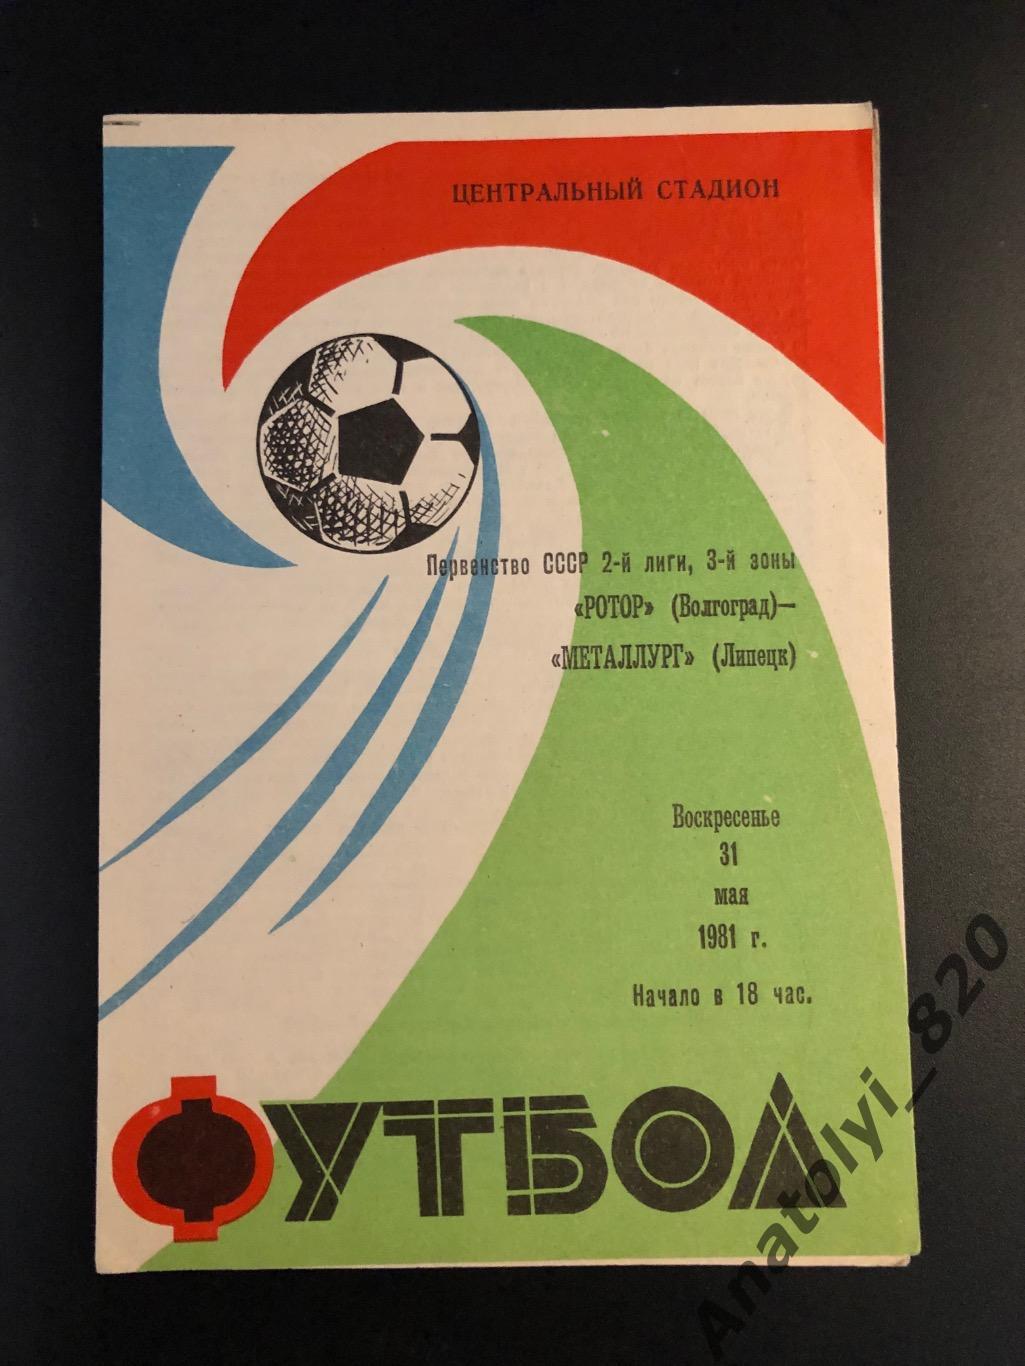 Ротор Волгоград - Металлург Липецк, 31.05.1981, второй вид обложки